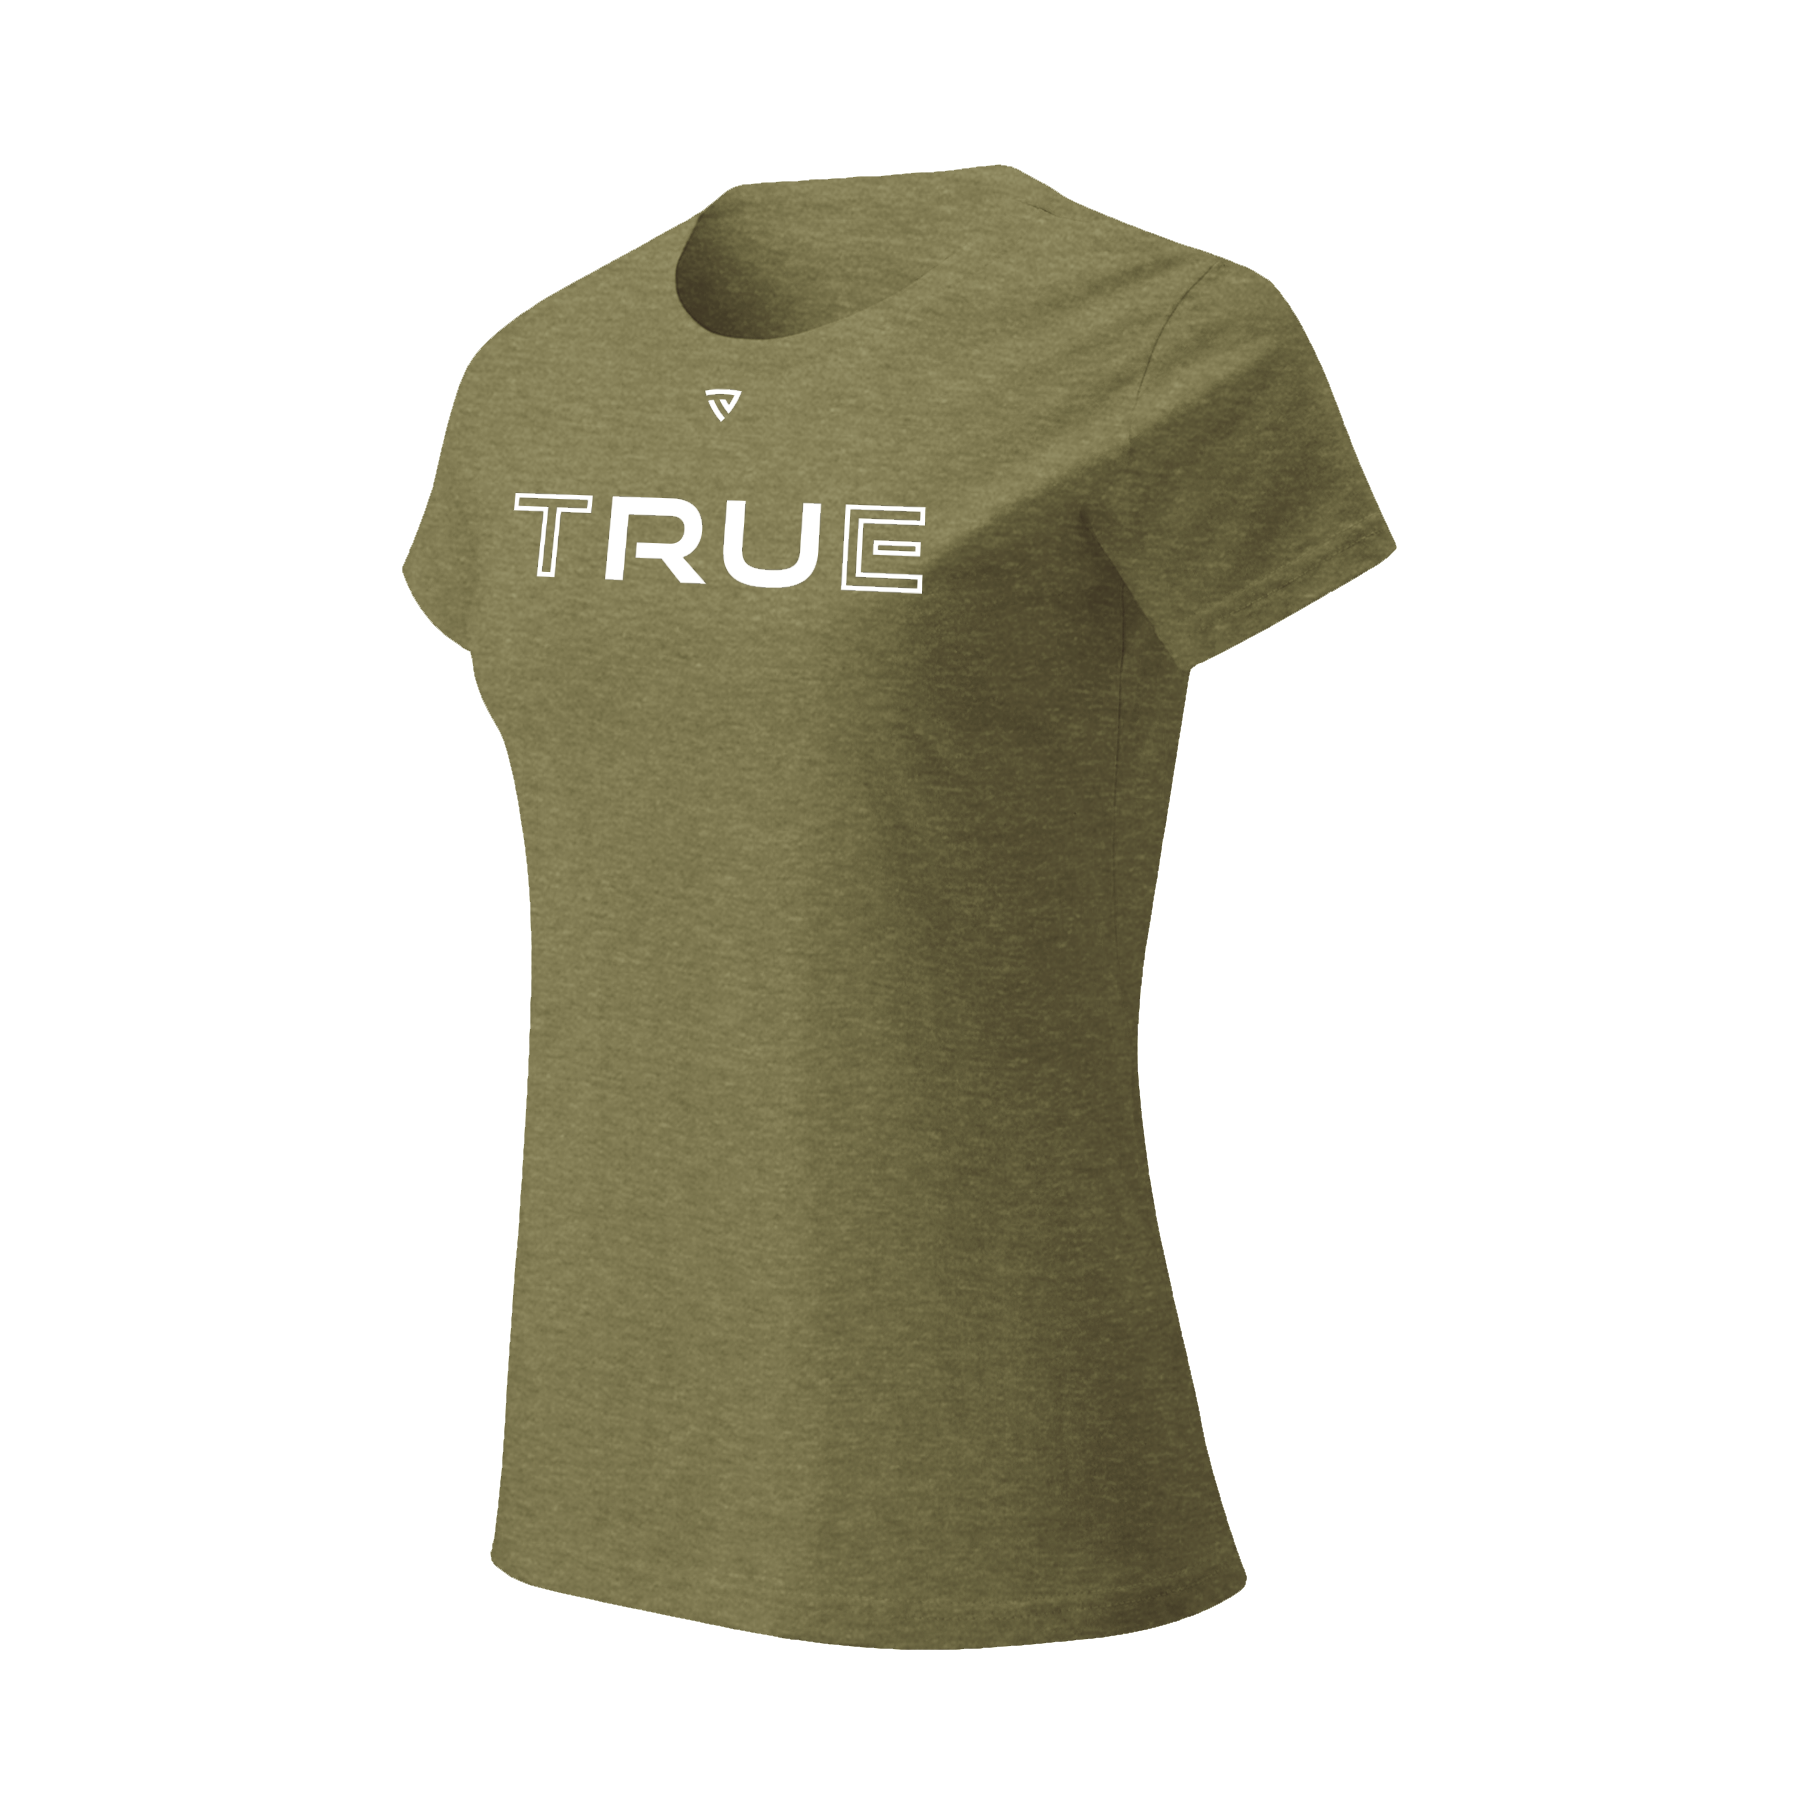 Women's RU TRUE Military Green Tee